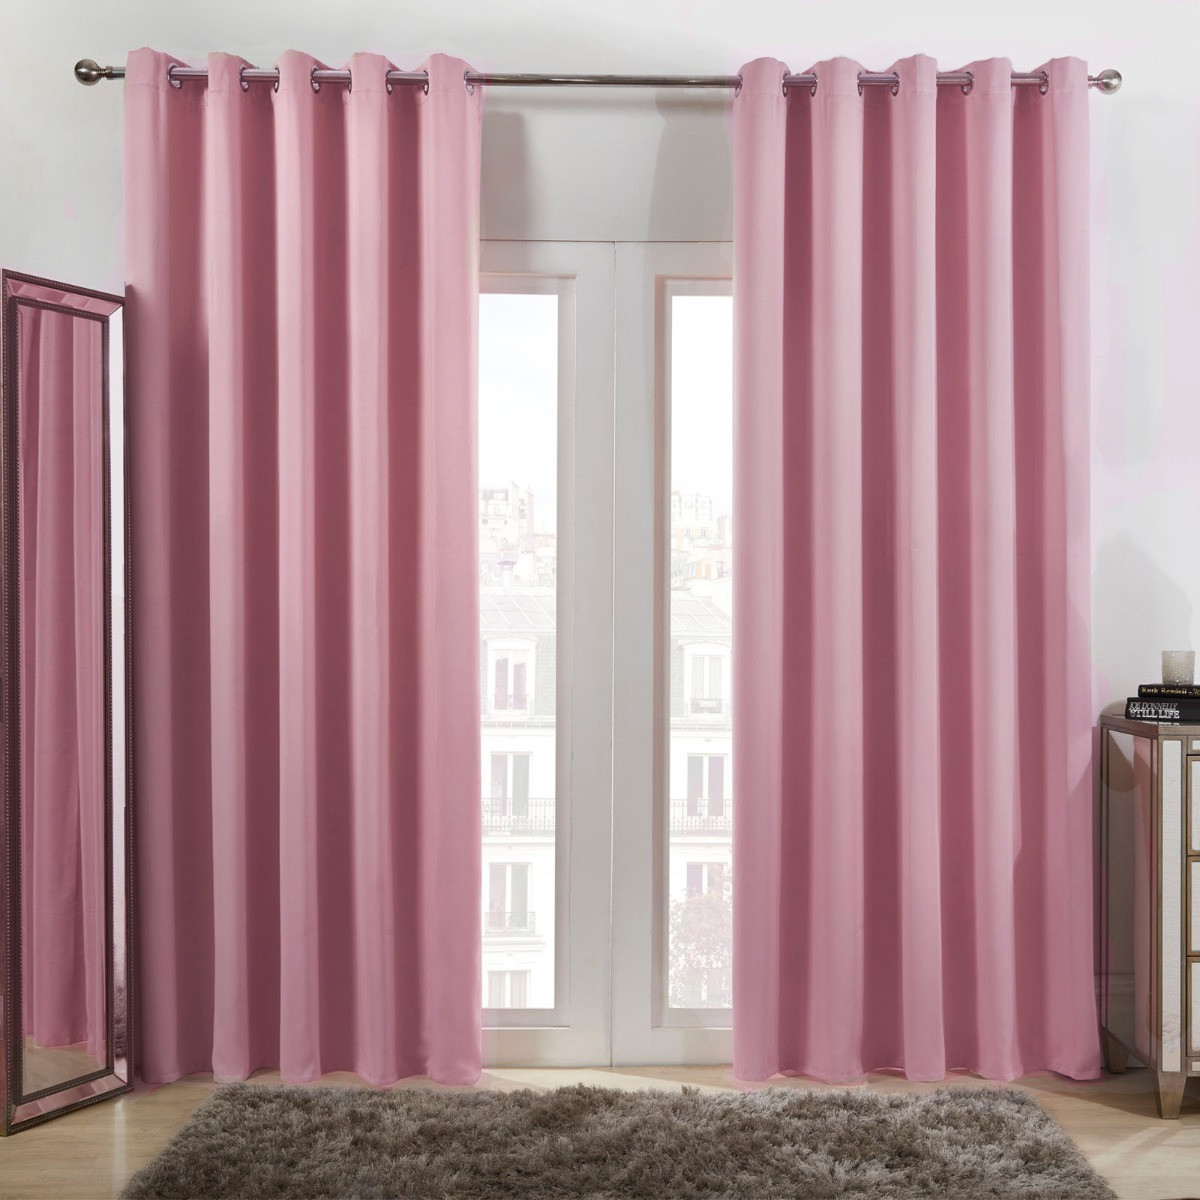 Dreamscene Eyelet Blackout Curtains, Pink - 117 x 137cm (46" x 54")>